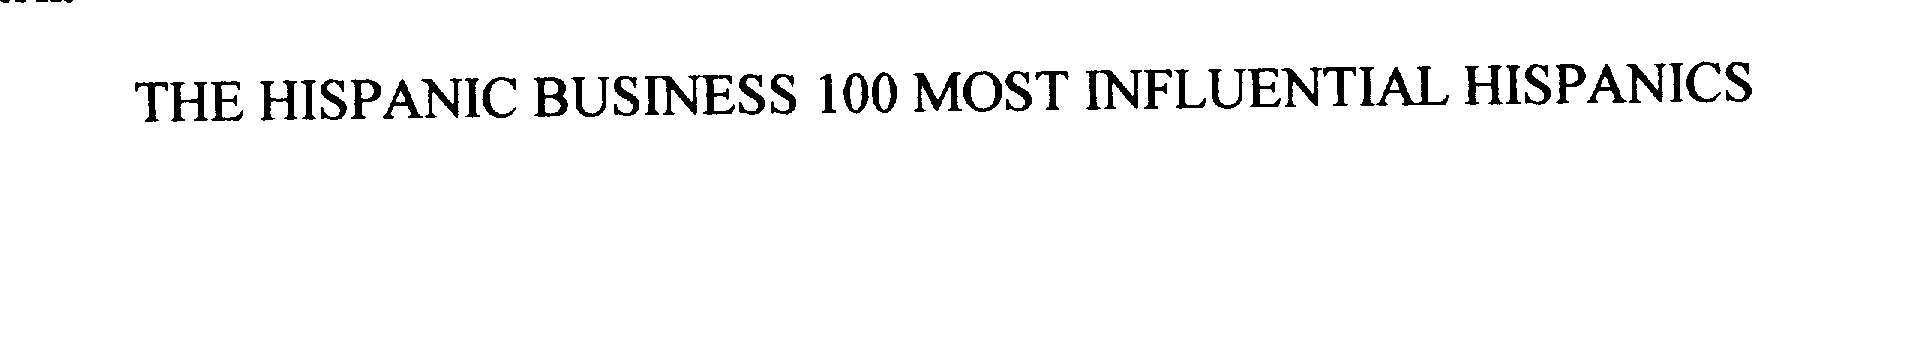  THE HISPANIC BUSINESS 100 MOST INFLUENTIAL HISPANICS